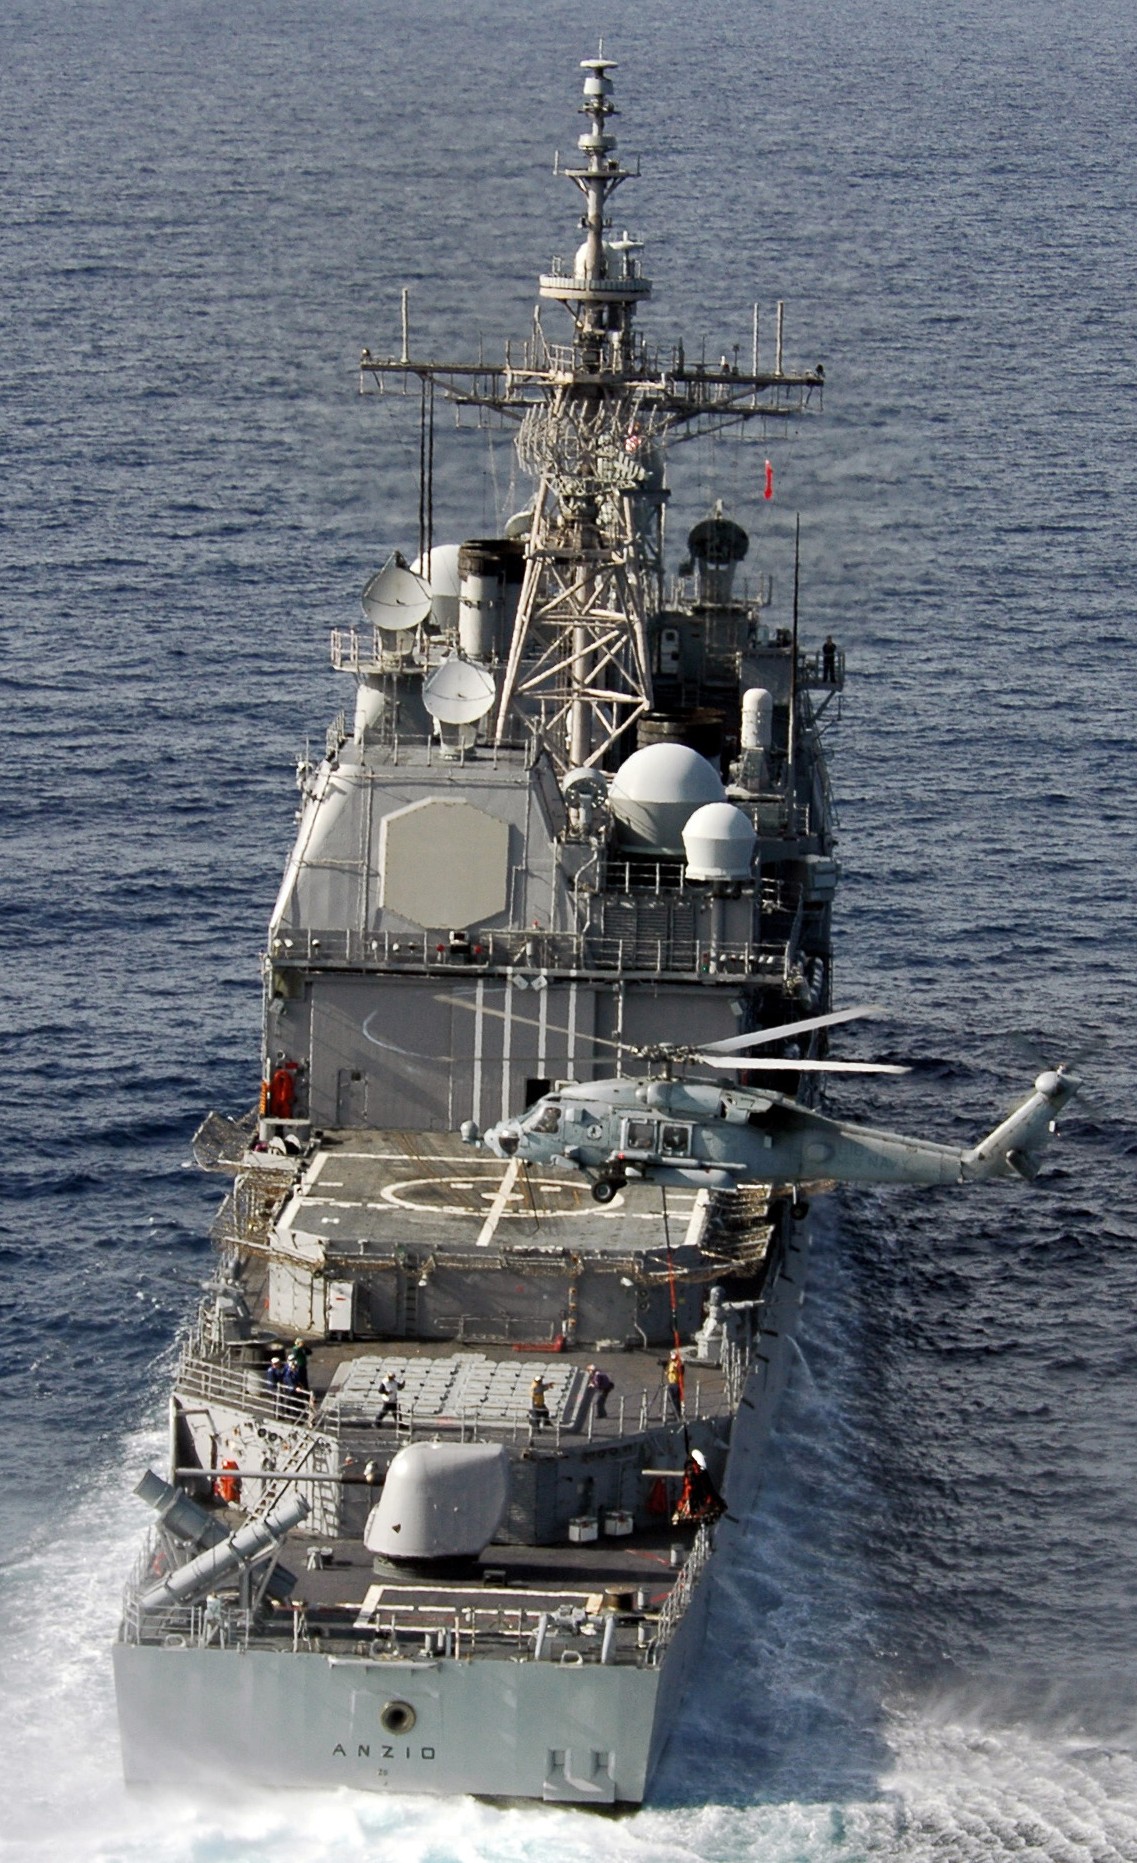 cg-68 uss anzio ticonderoga class guided missile cruiser aegis us navy mediterranean sea 09